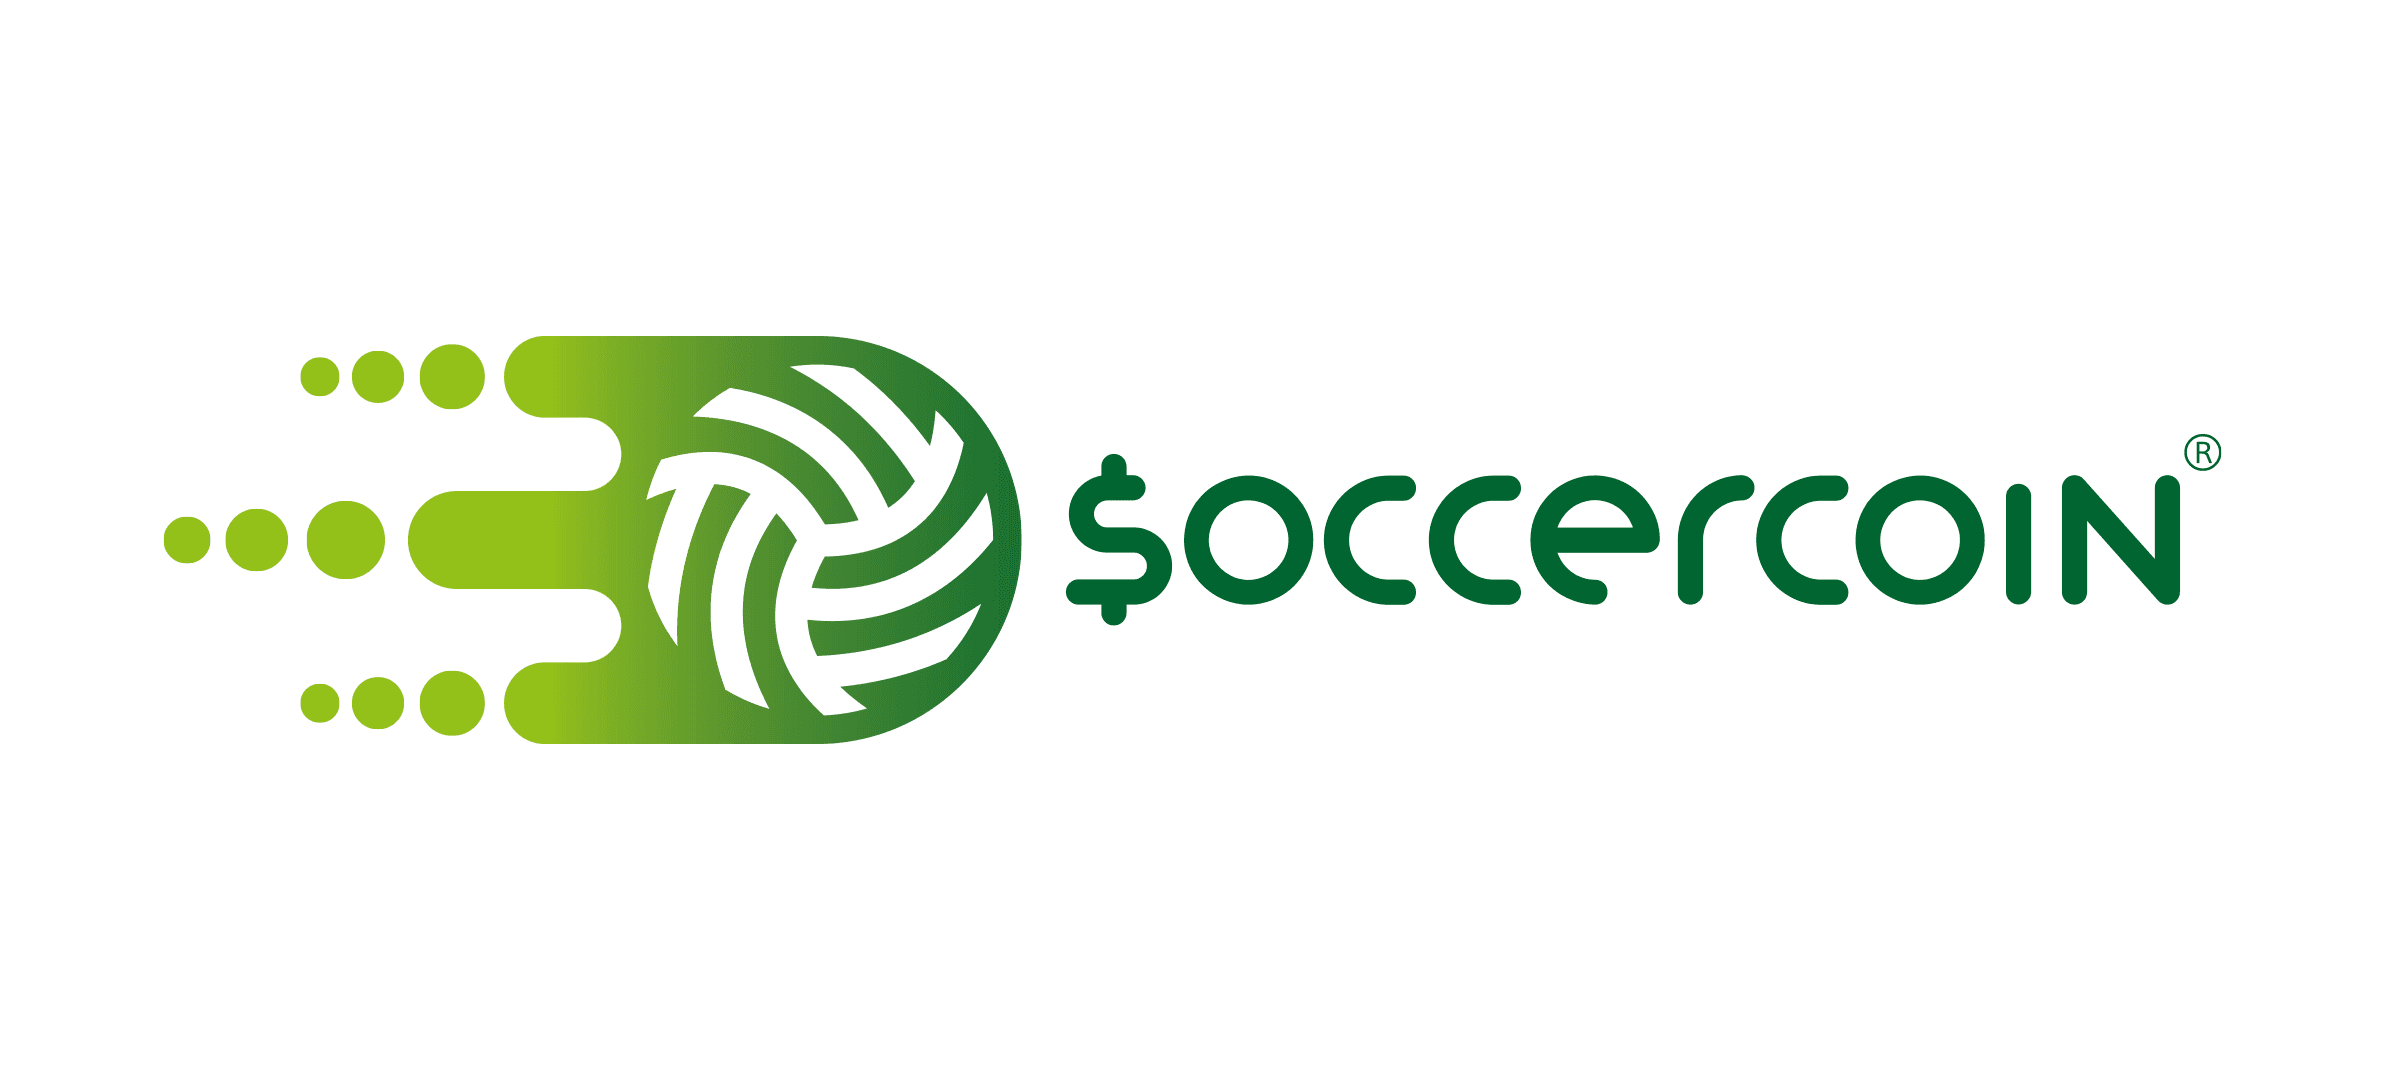 SoccerCoin_NFT Banner